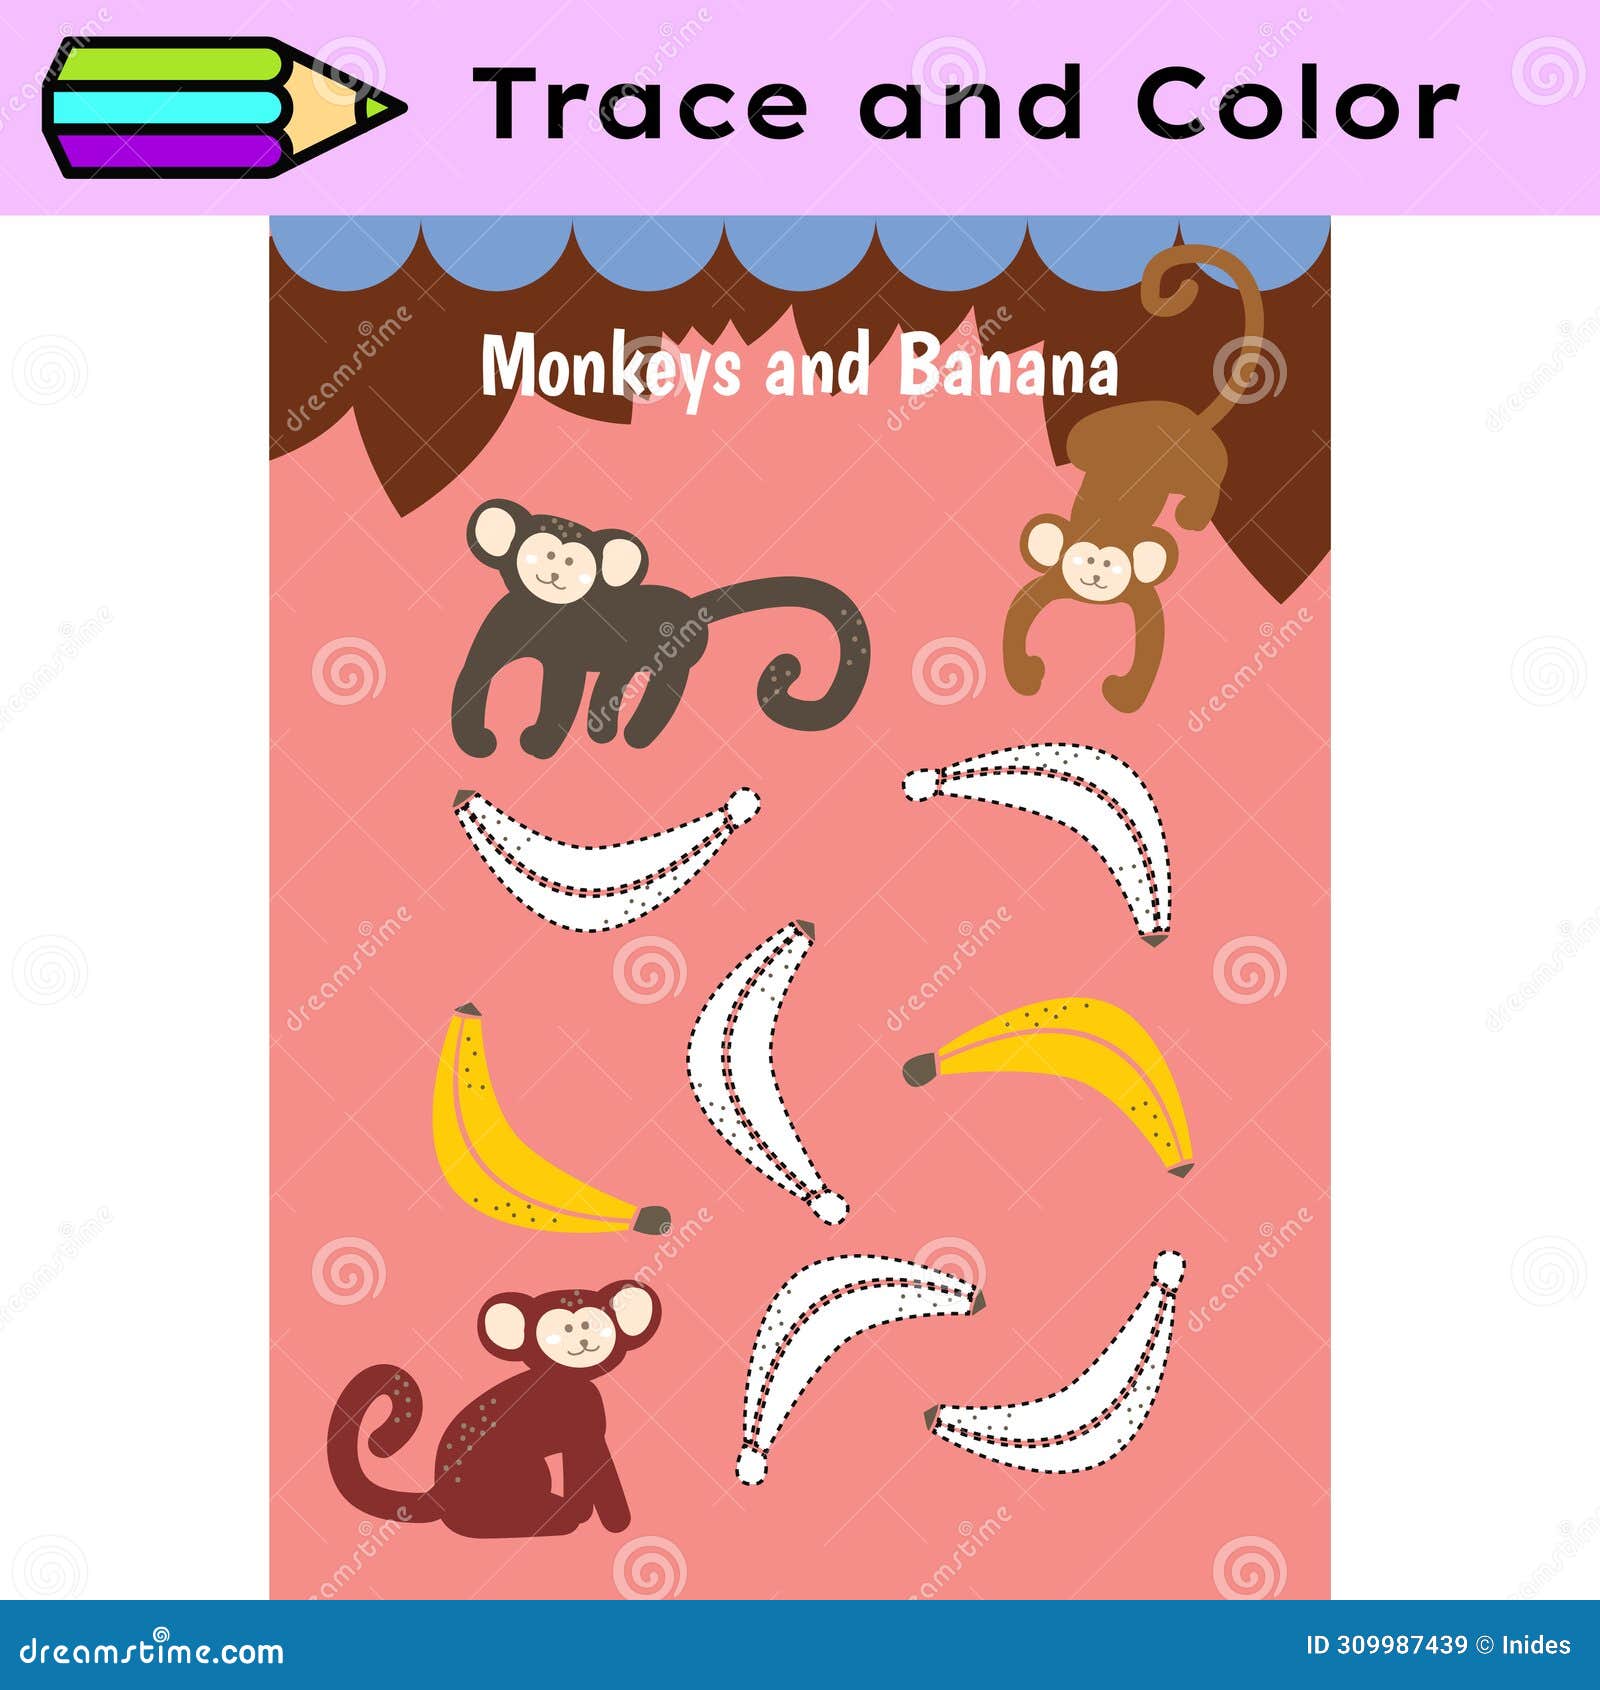 pen tracing lines activity worksheet for children. pencil control for kids practicing motoric skills. monkeys